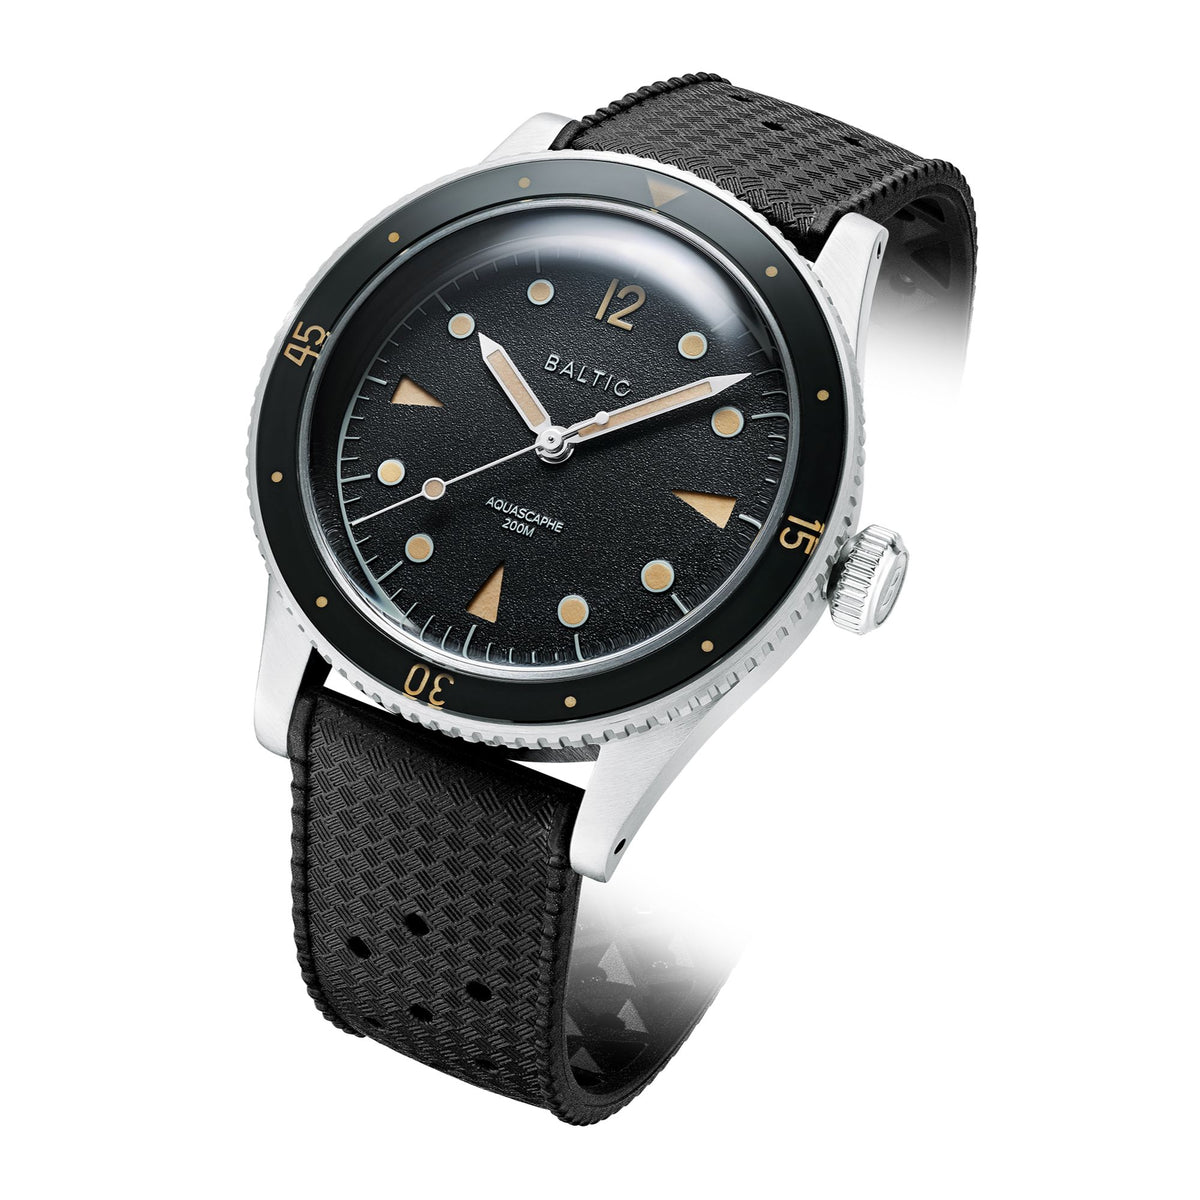 Aquascaphe Classic Black Cream - Baltic Watches